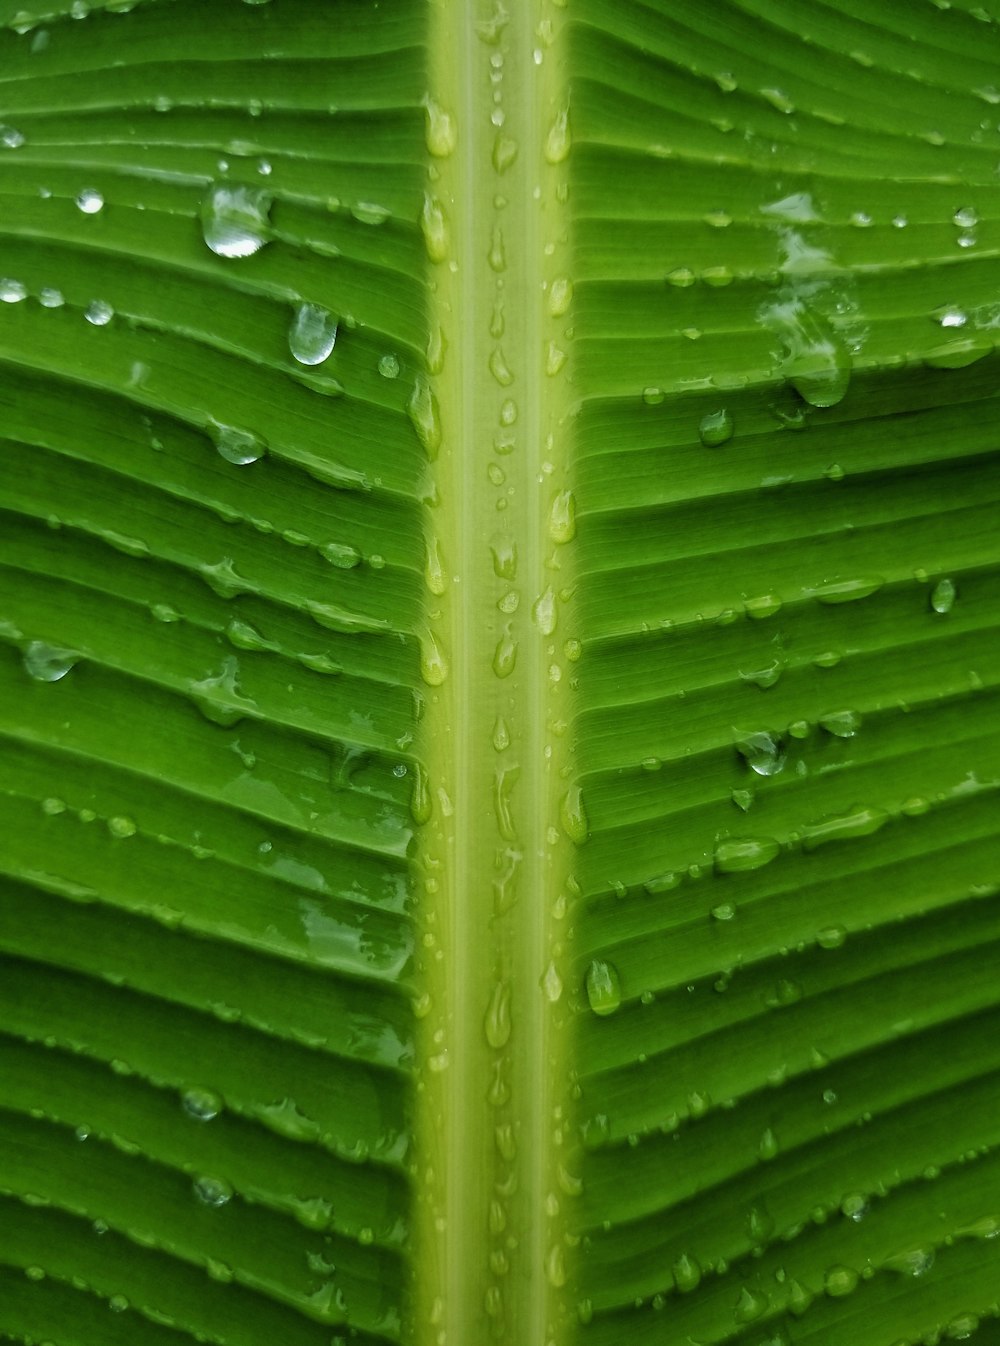 Banana Leaf Pictures [HD] | Download Free Images on Unsplash